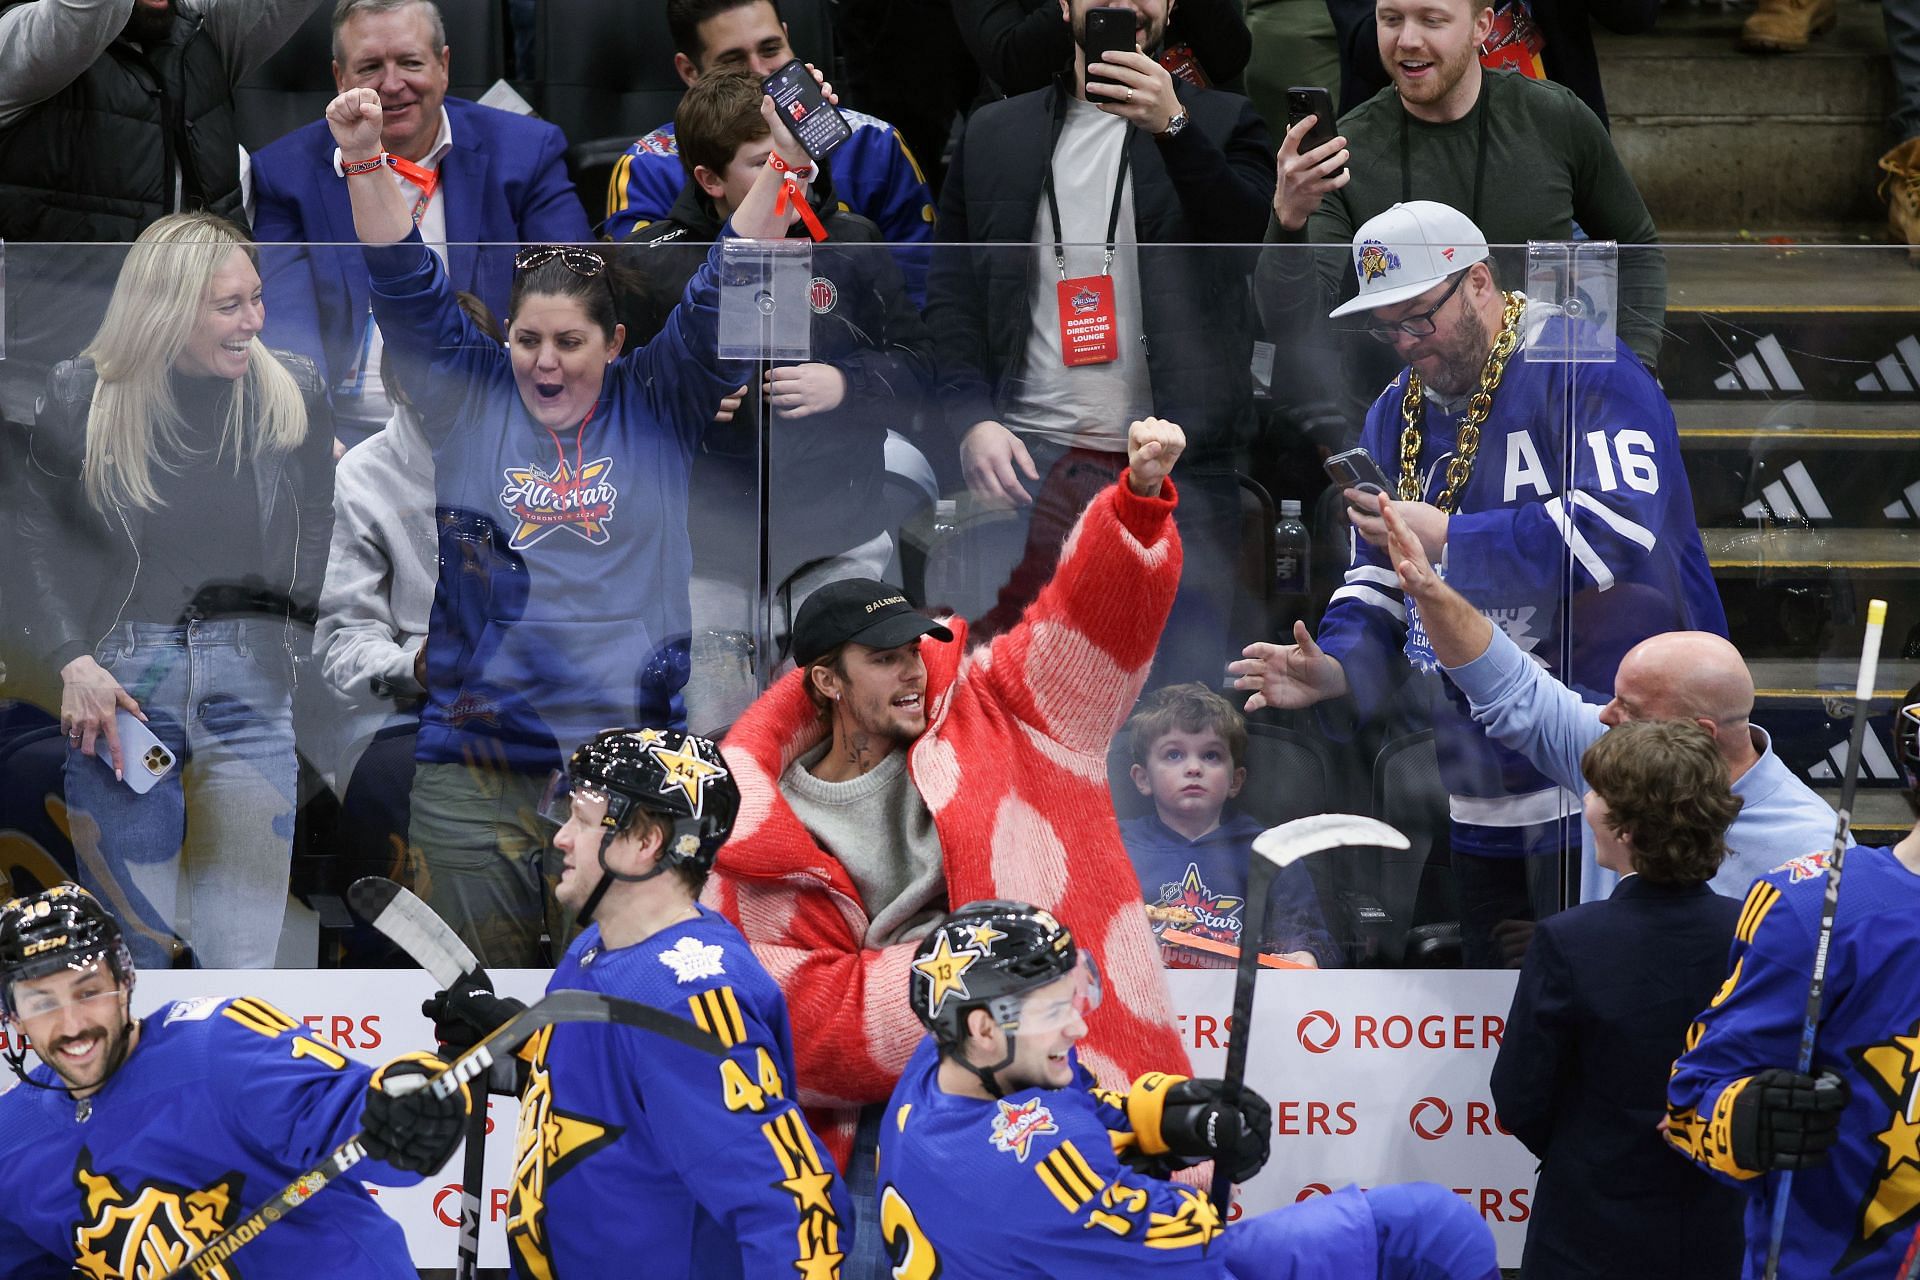 Bieber arrives at NHL All-Star Game sporting polka dot oversized jacket